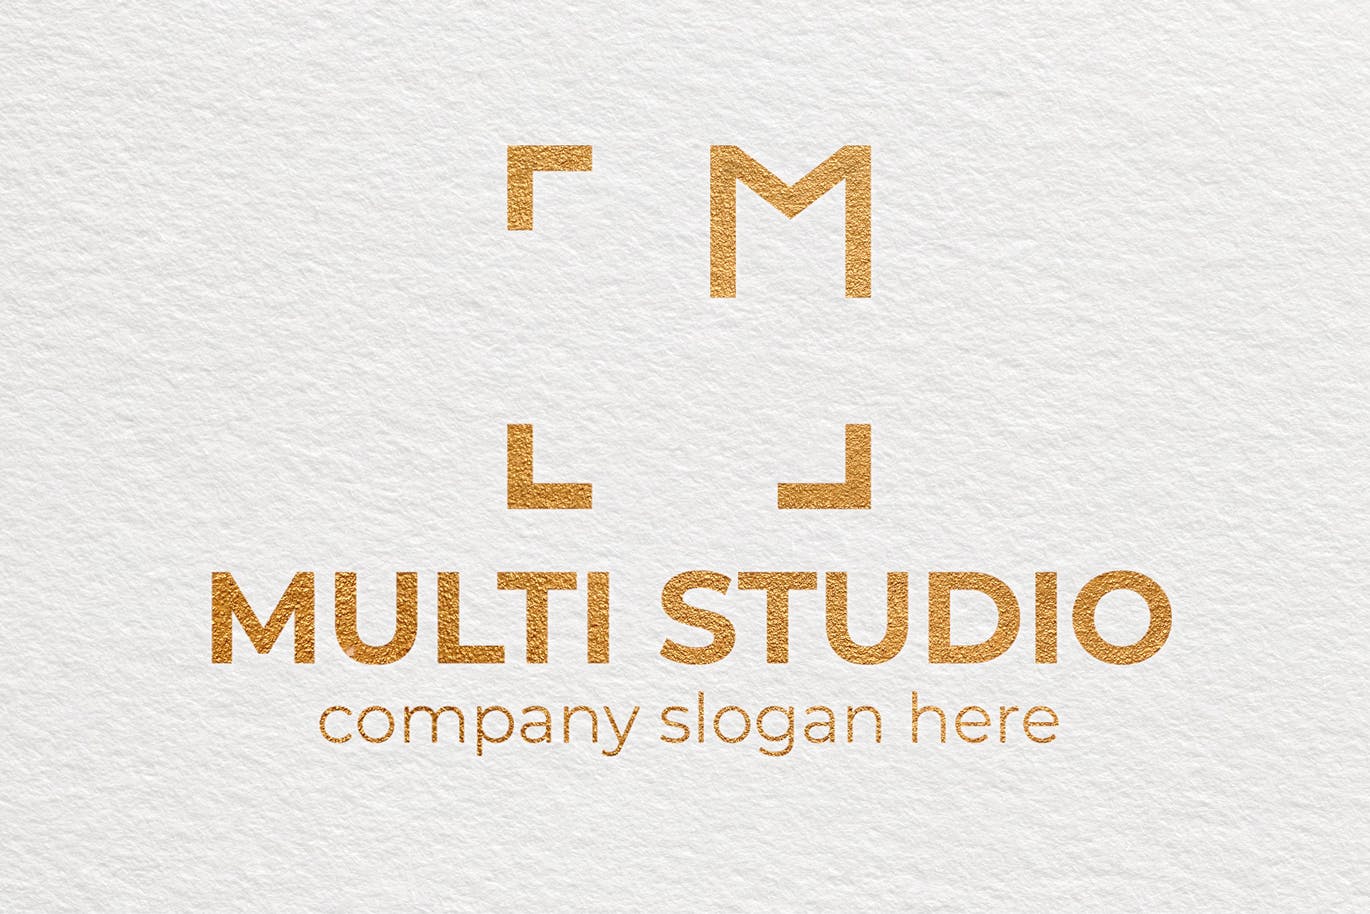 字母M创意图形企业品牌Logo设计蚂蚁素材精选模板 Letter Based Business Logo Template插图(3)